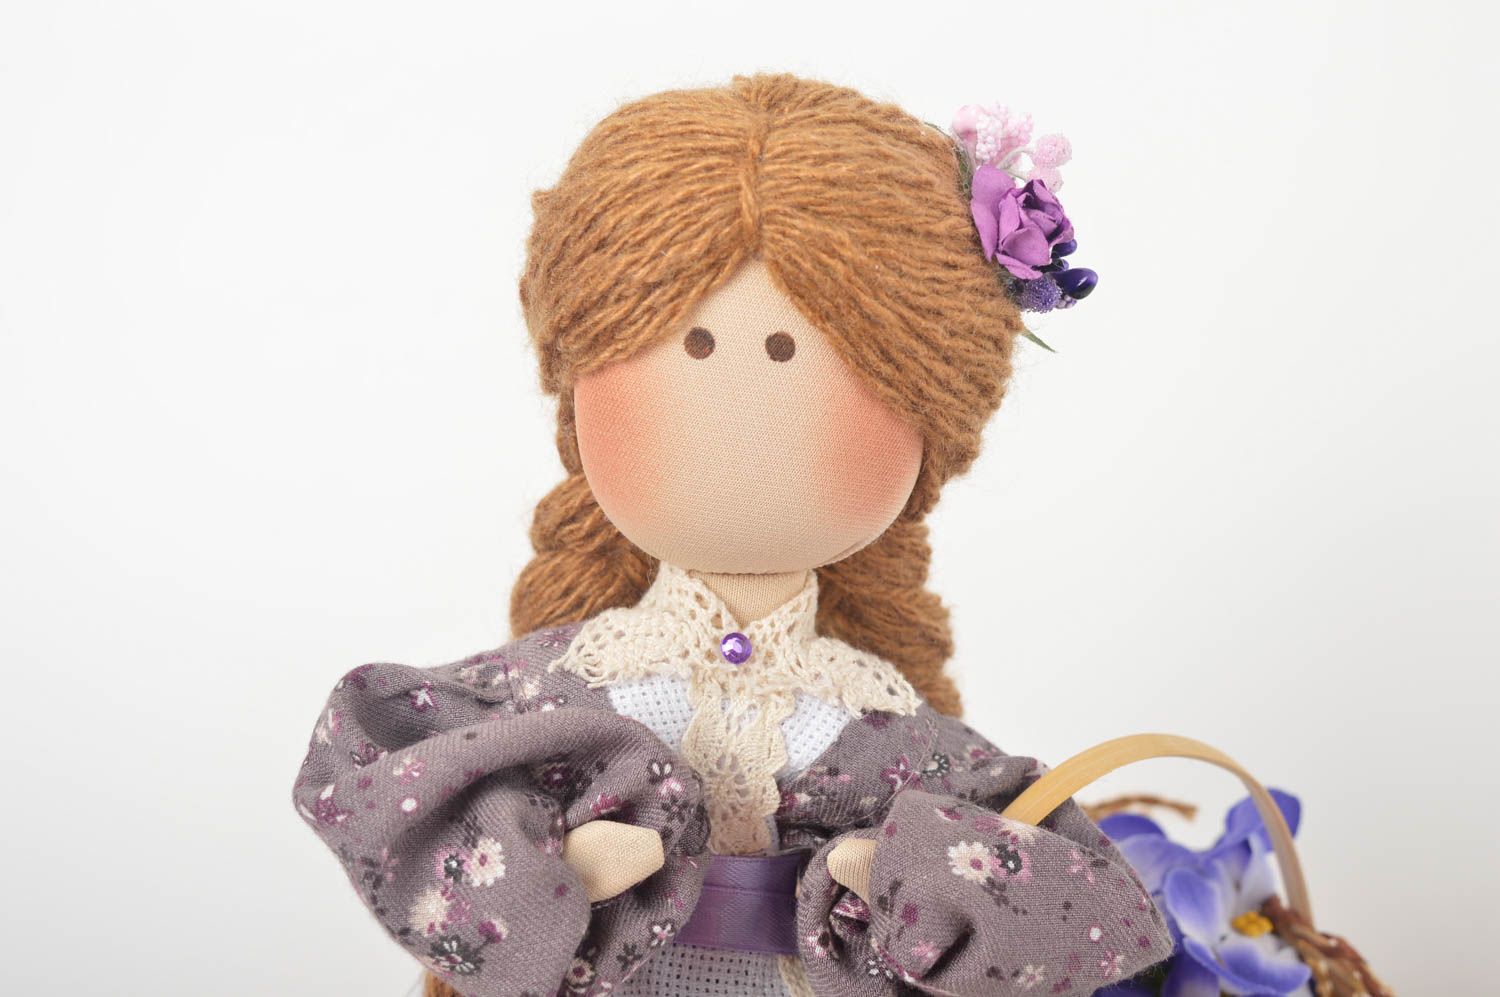 Designer doll in vintage dress stuffed toy designer childrens toy decor gift photo 3